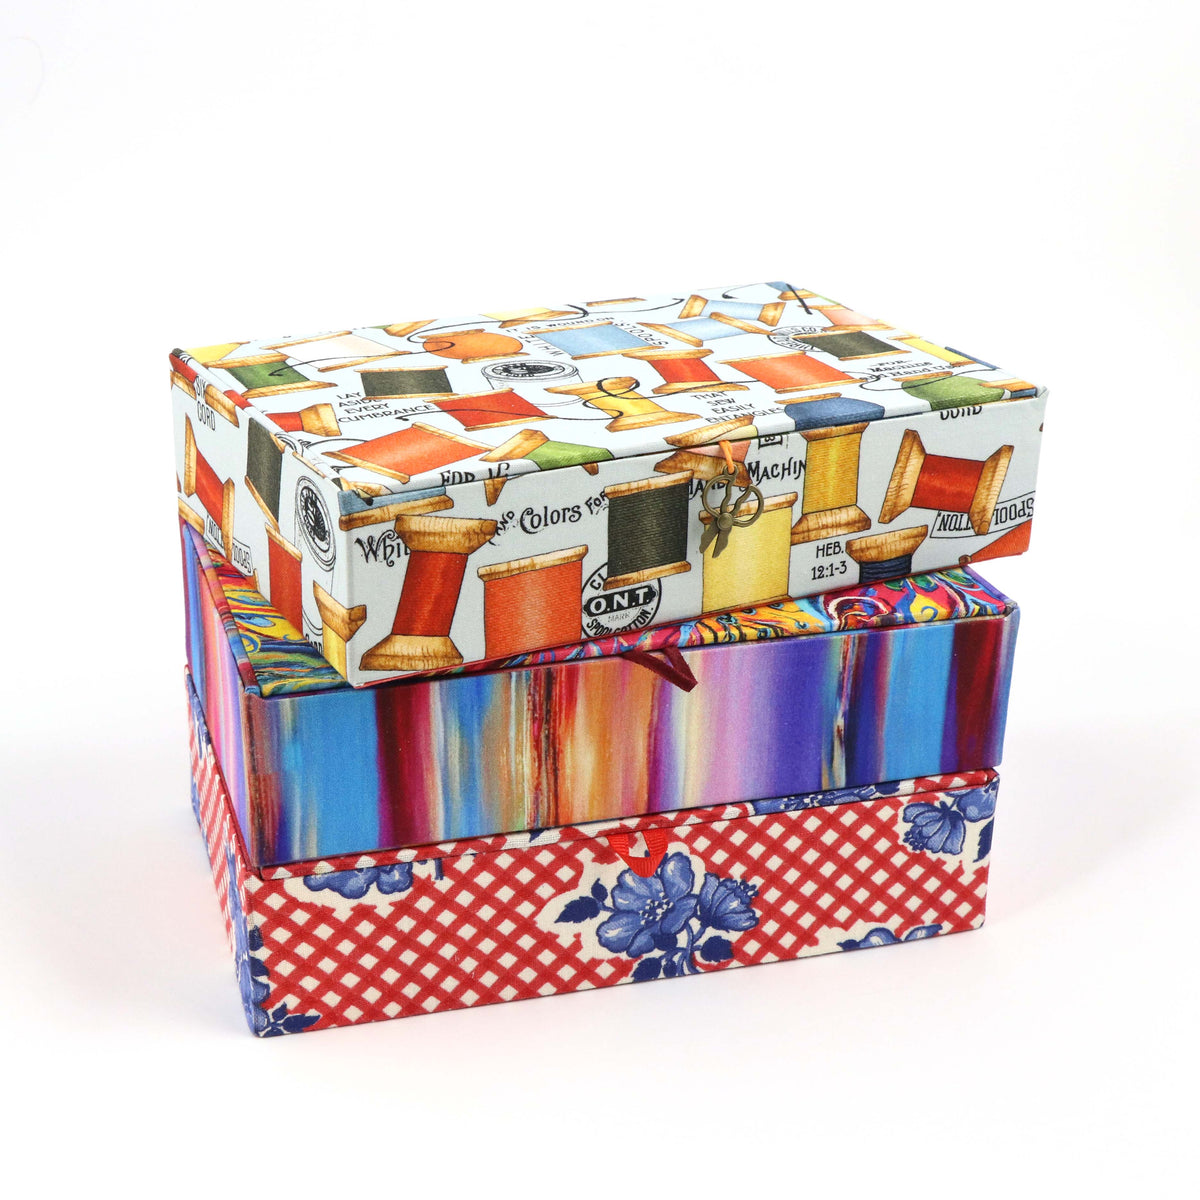 Fabric cigar box DIY kit, cartonnage kit 209